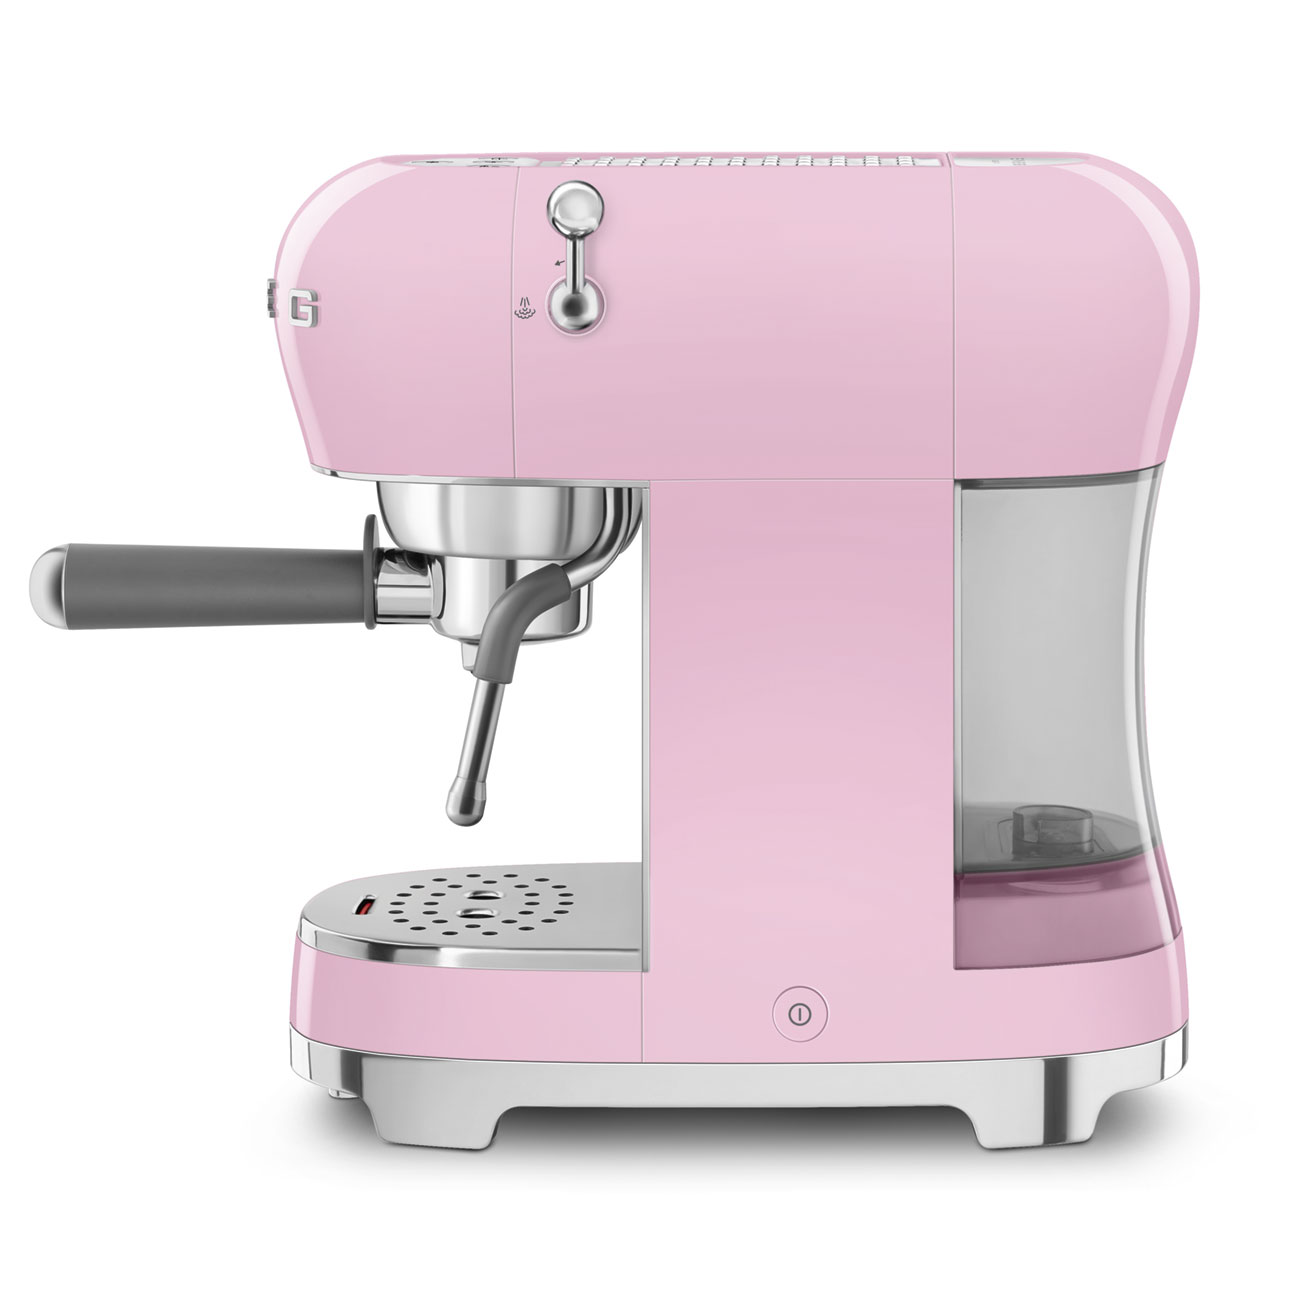 Smeg Pink Espresso Manual Coffee Machine with Steam Wand_2